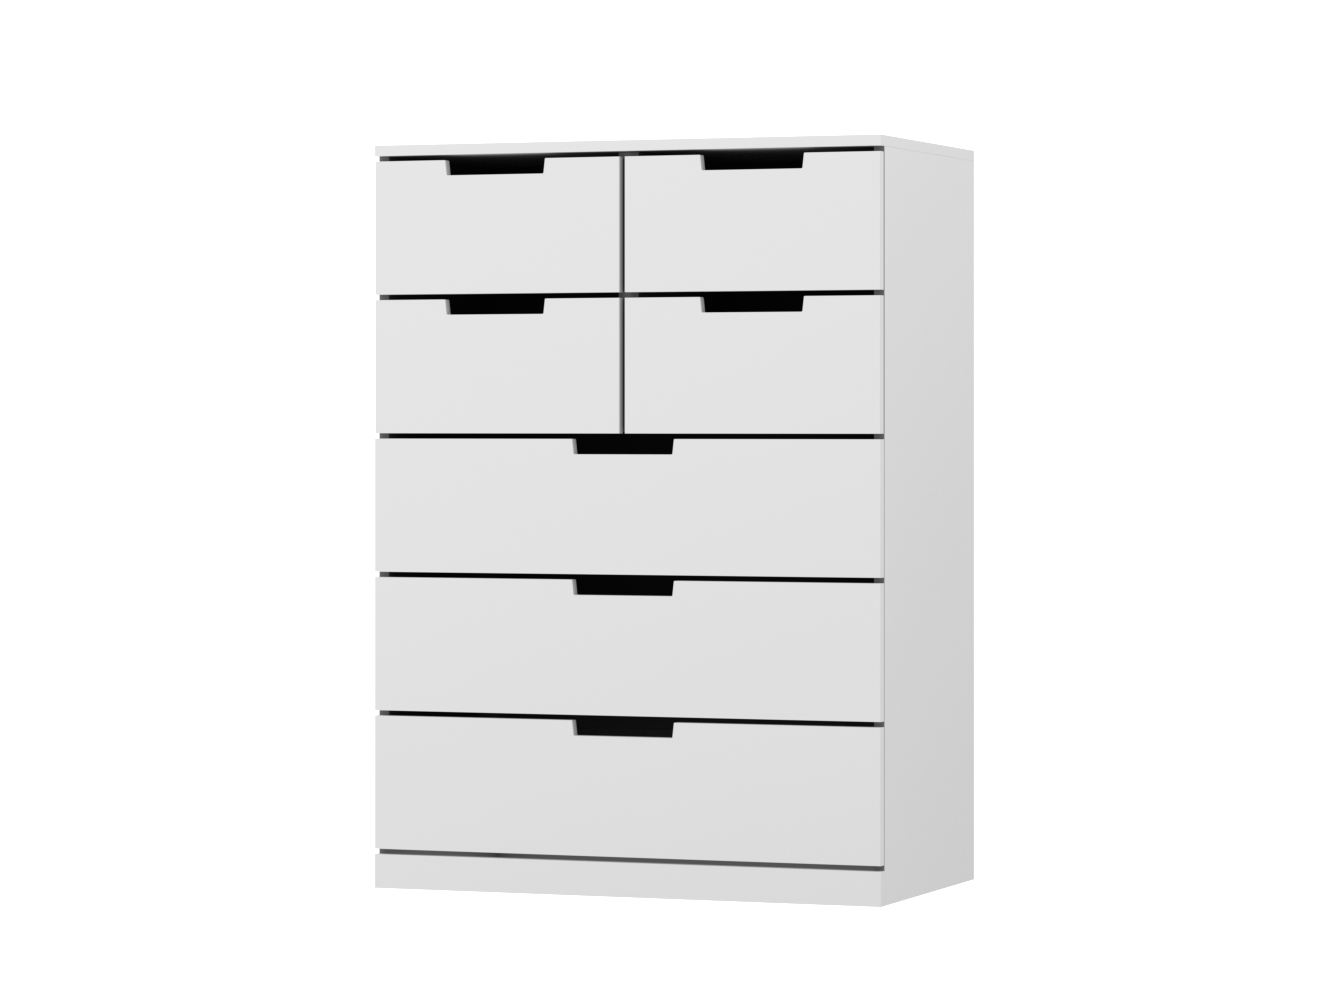 Изображение товара Комод Нордли 15 white ИКЕА (IKEA), 60x45x110 см на сайте adeta.ru